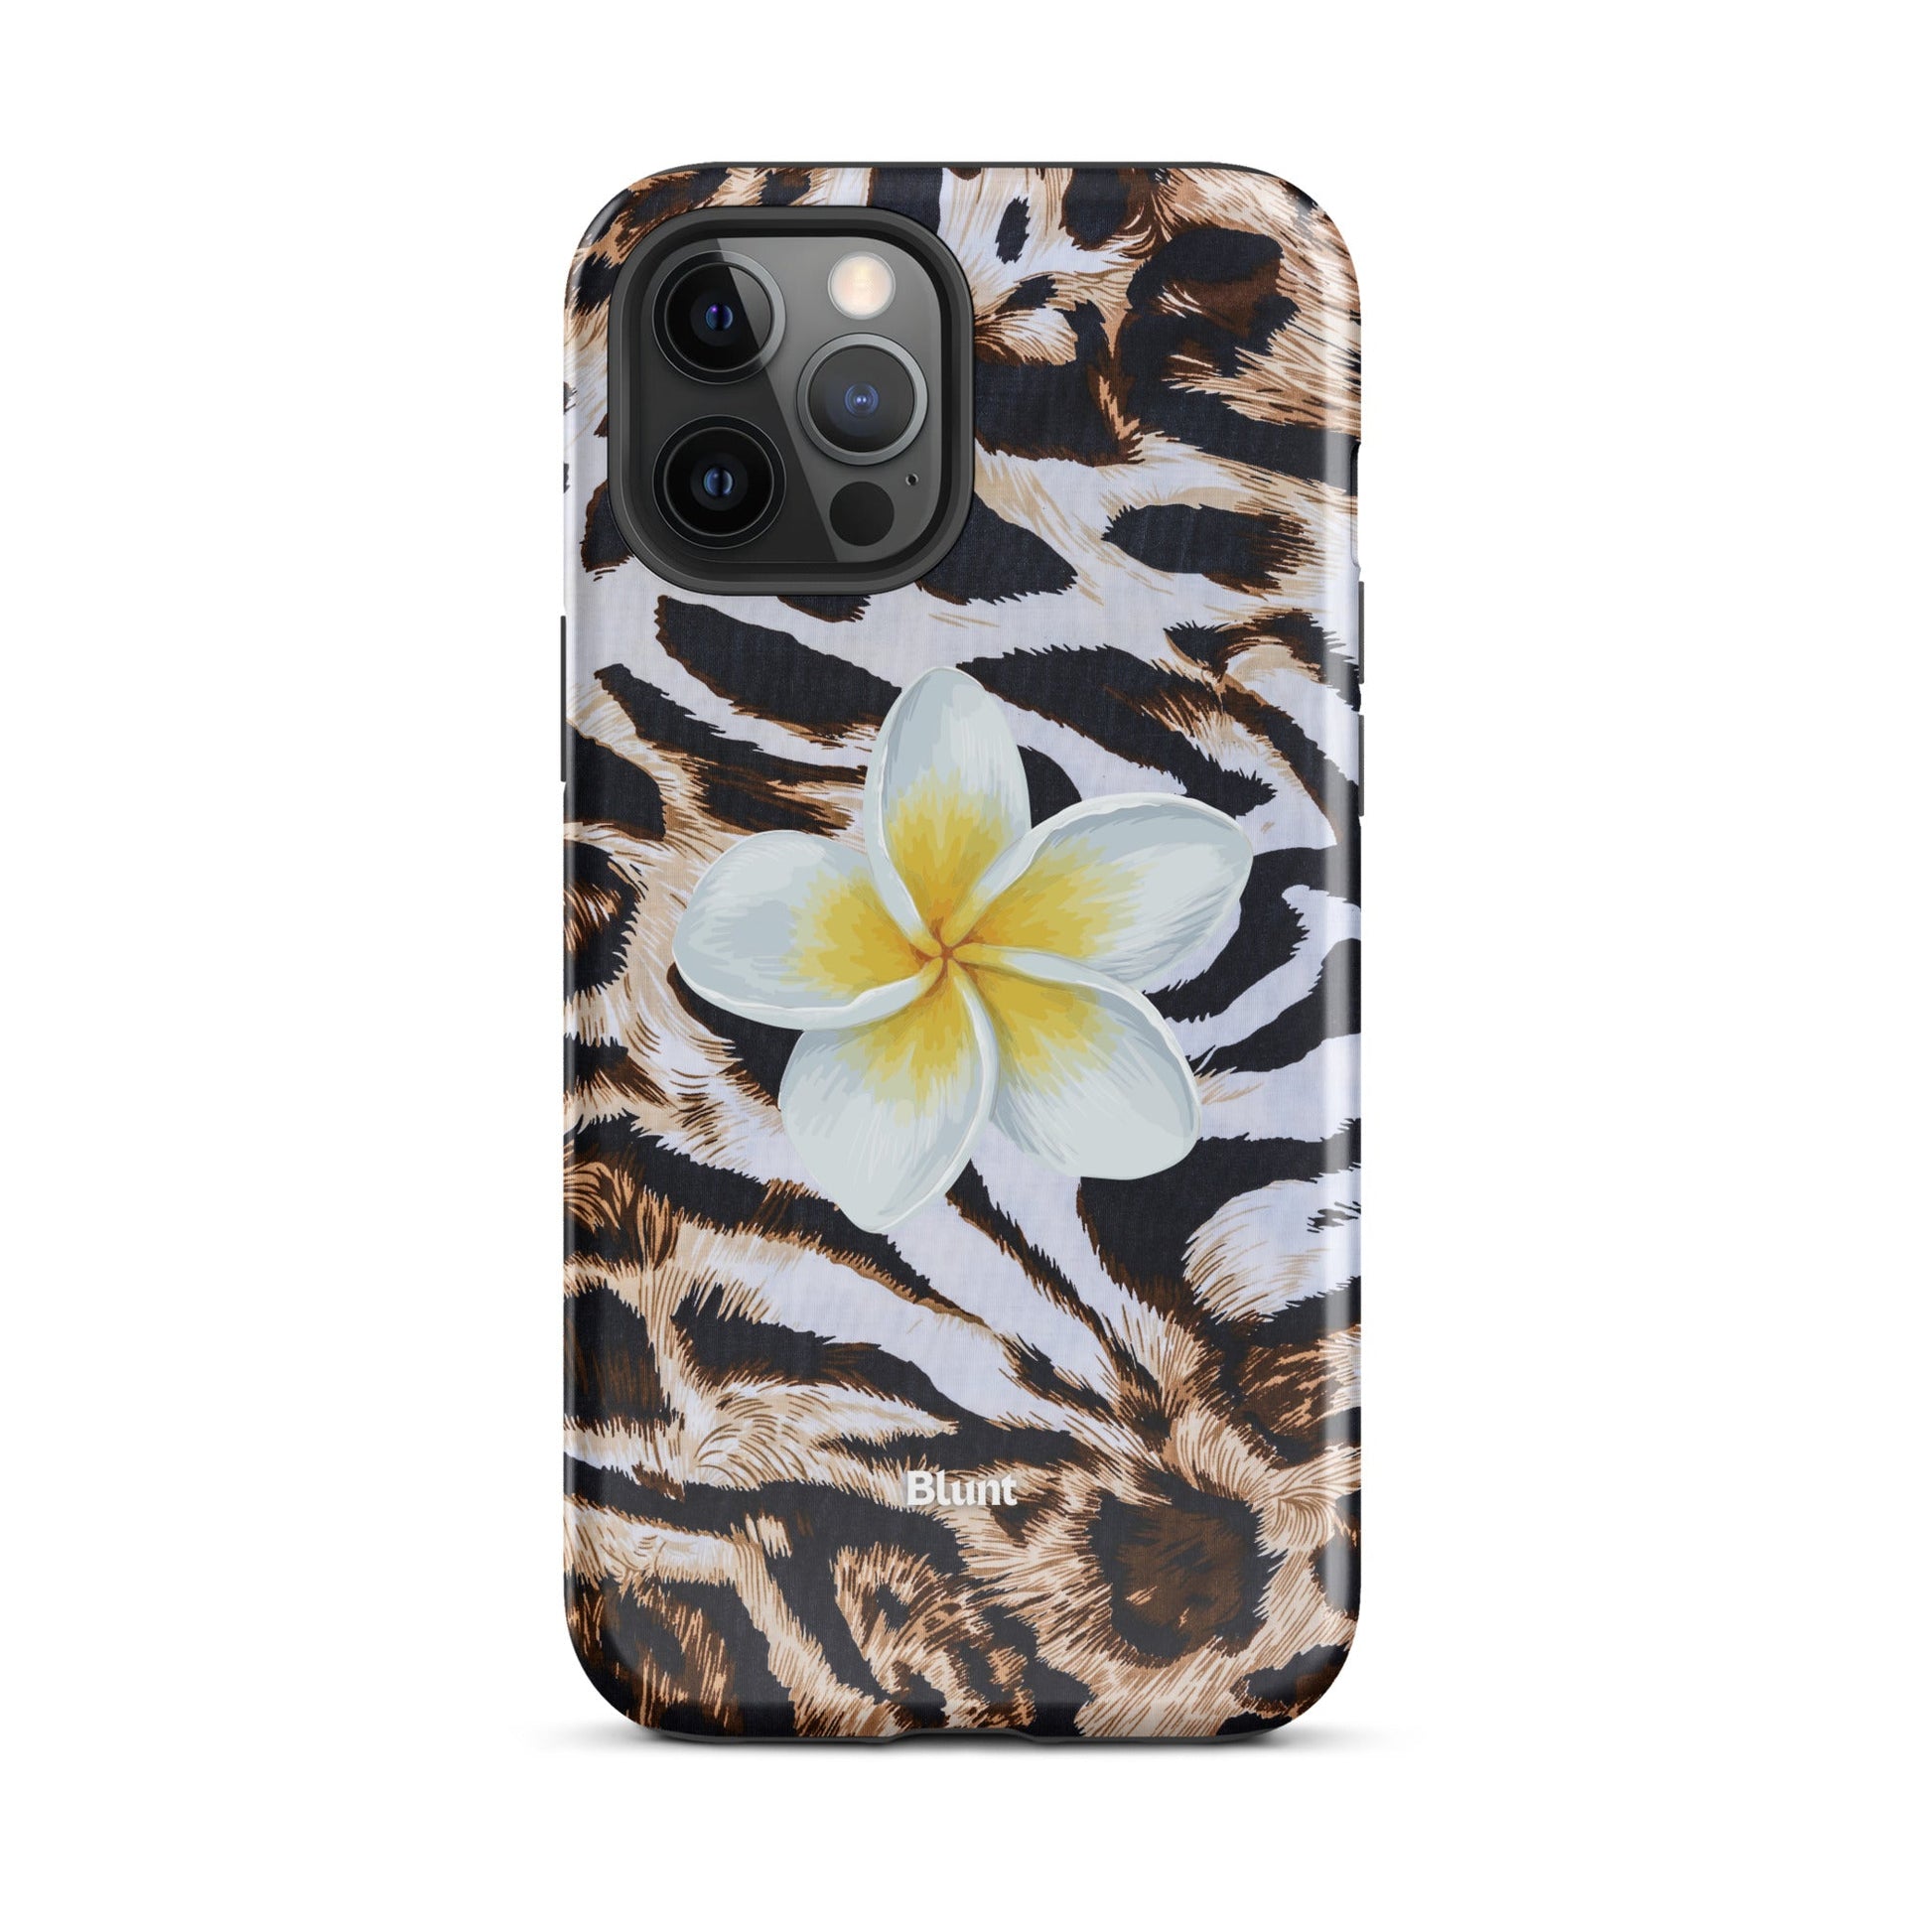 Wild Bloom iPhone Case - blunt cases